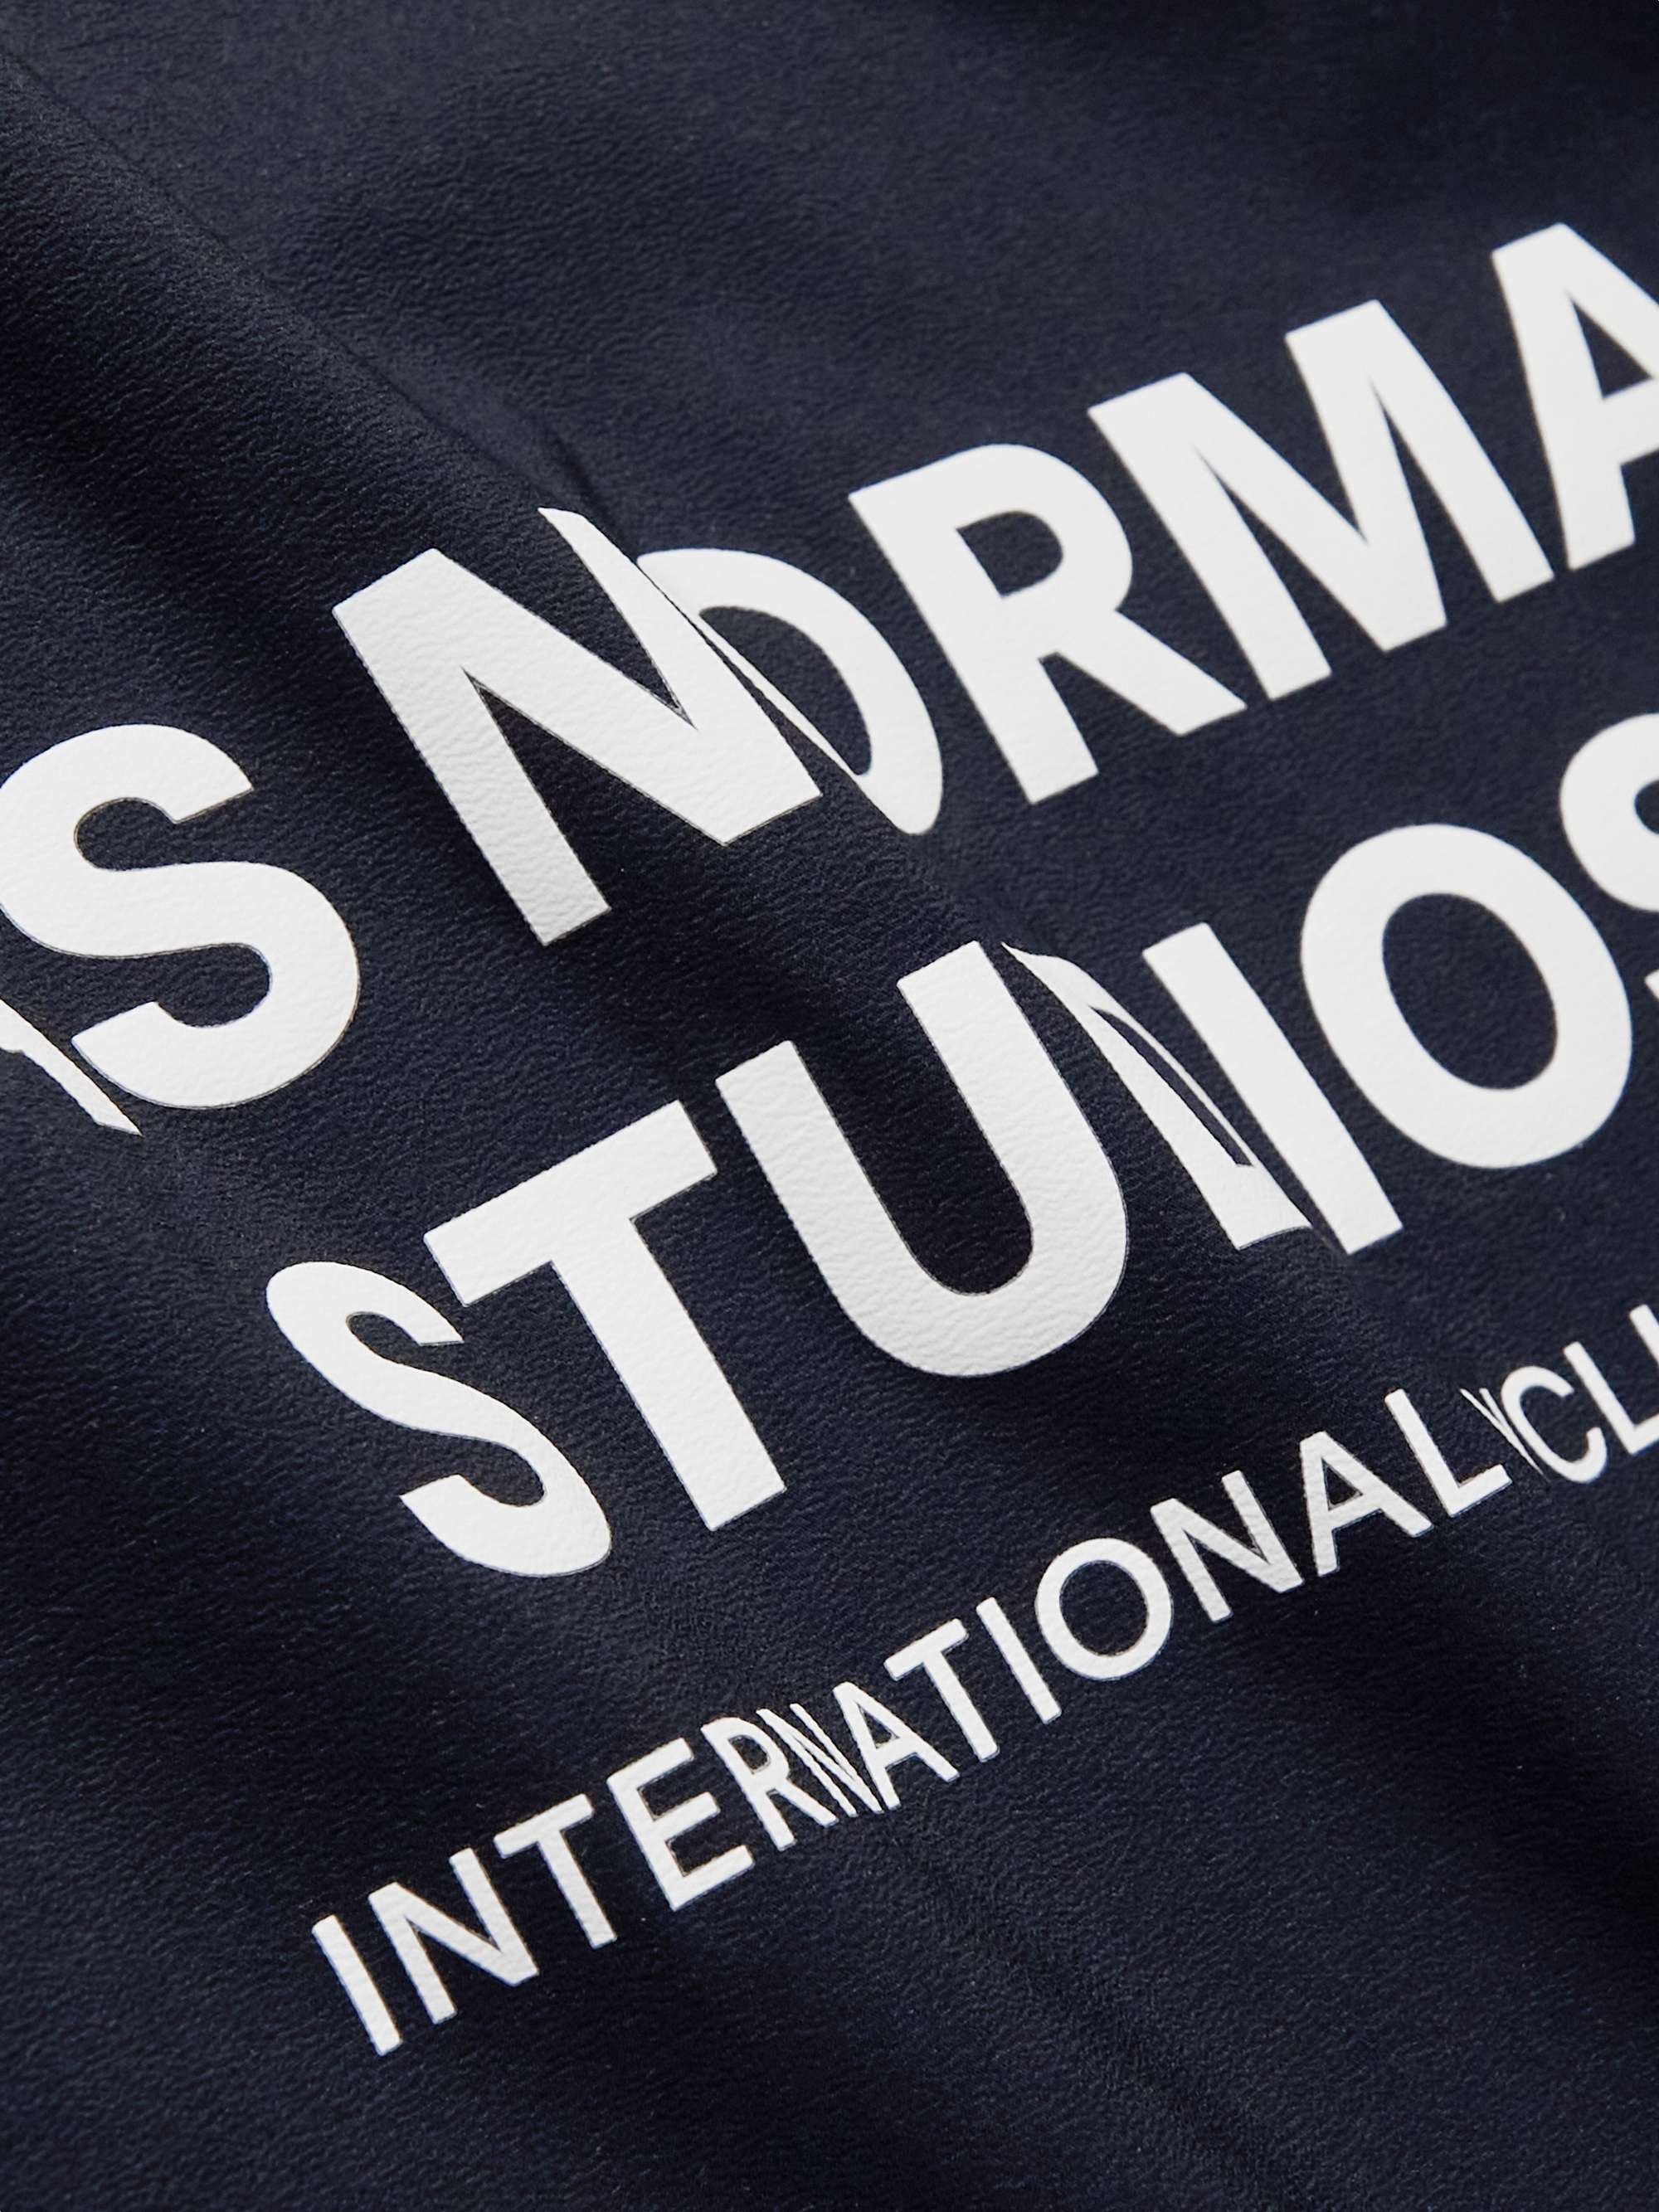 PAS NORMAL STUDIOS Mechanism Logo-Print ENTRANT-Nylon Cycling Jacket